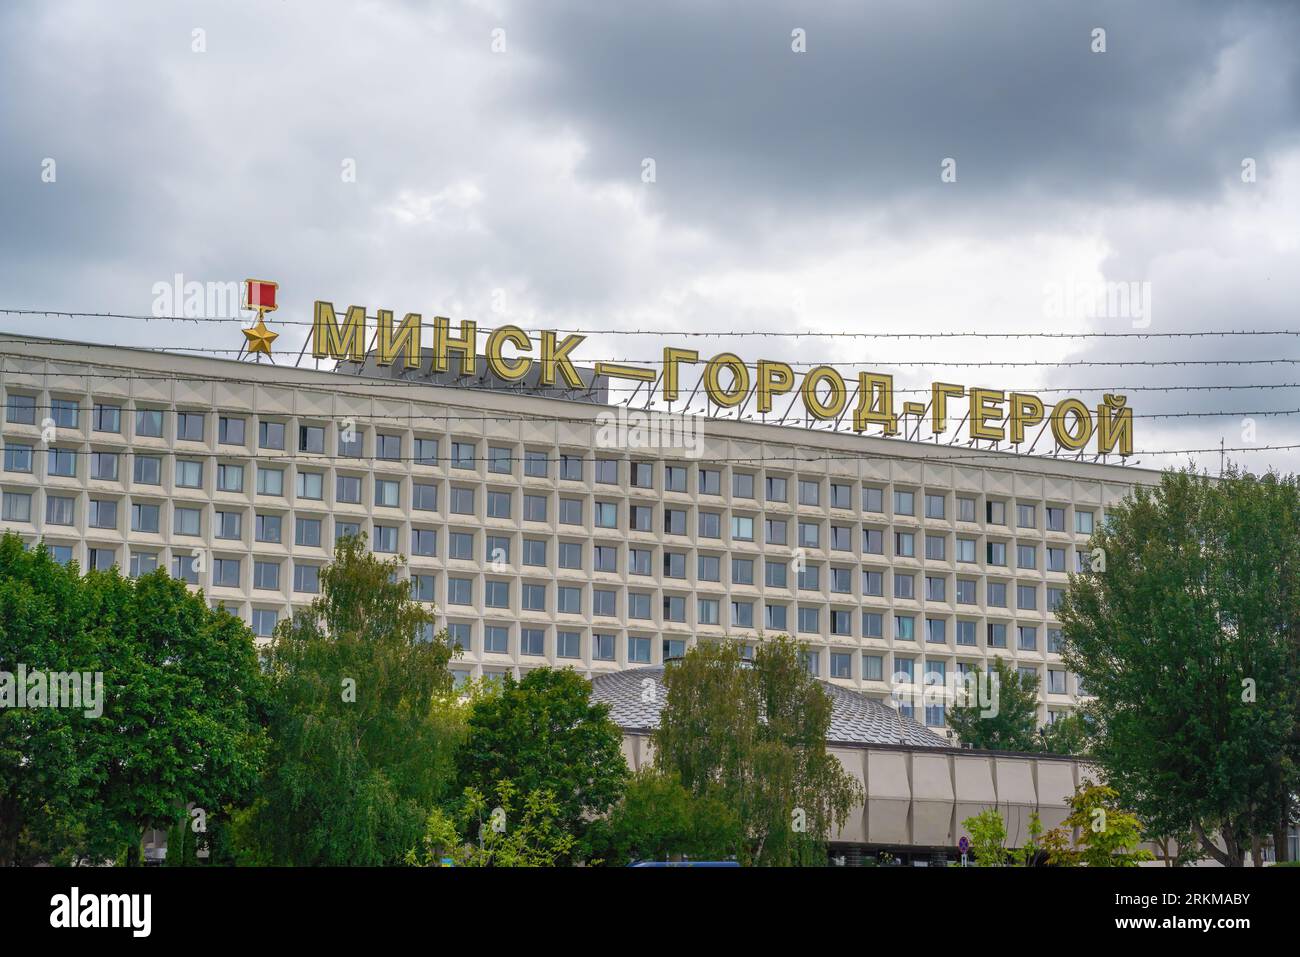 Modernist Soviet Building with Minsk - Hero-City sign at Pobeditelei Avenue - Minsk, Belarus Stock Photo